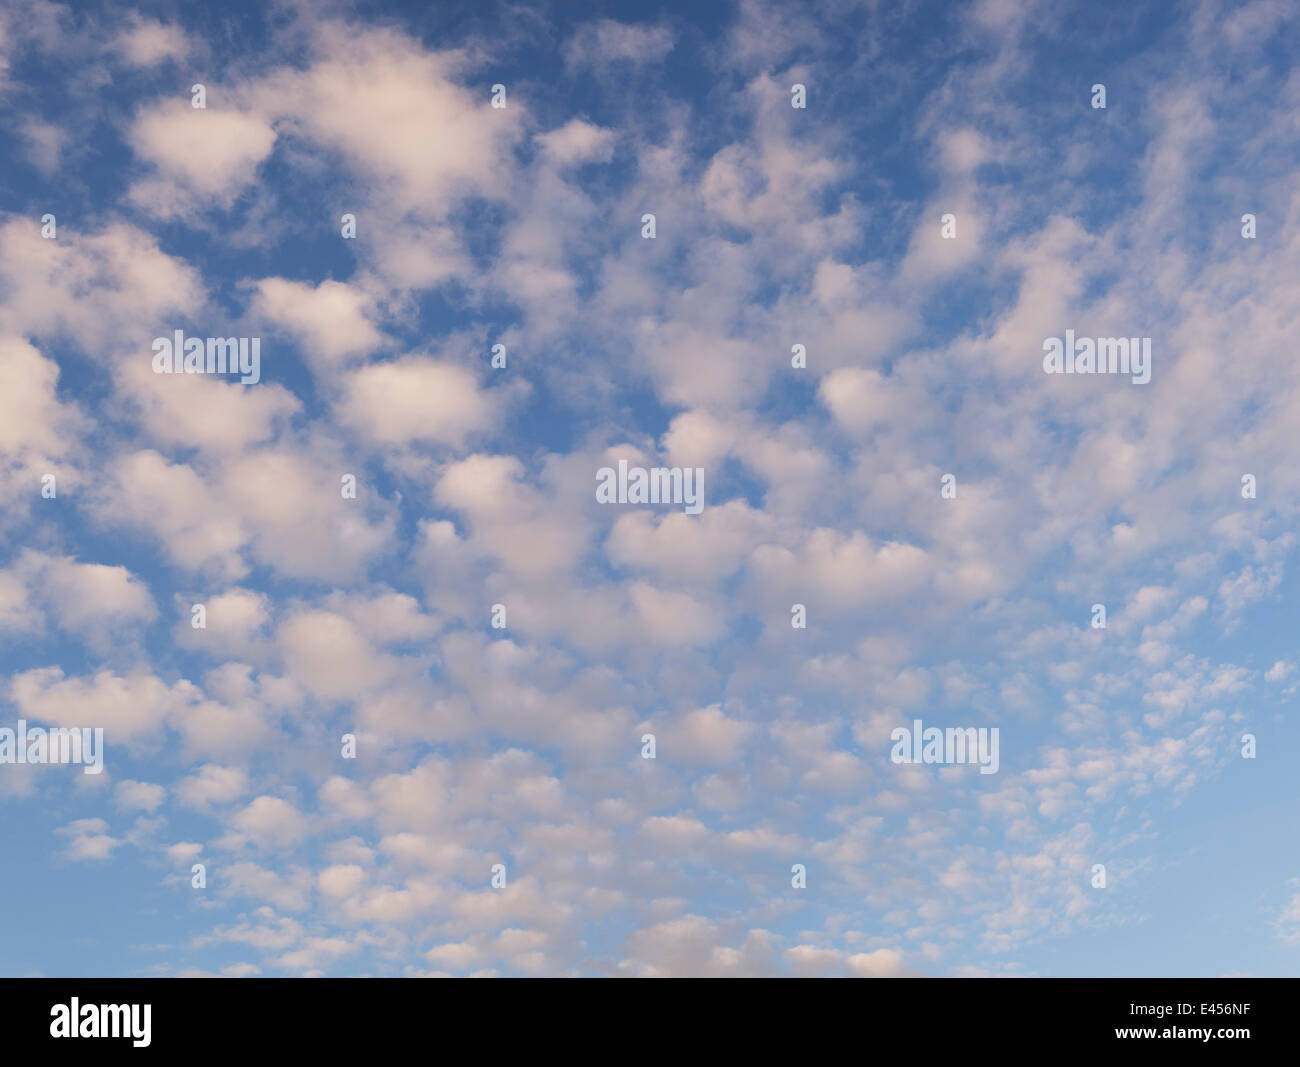 Altocumulus undulatus. Blue Sky and Cloud patterns Stock Photo